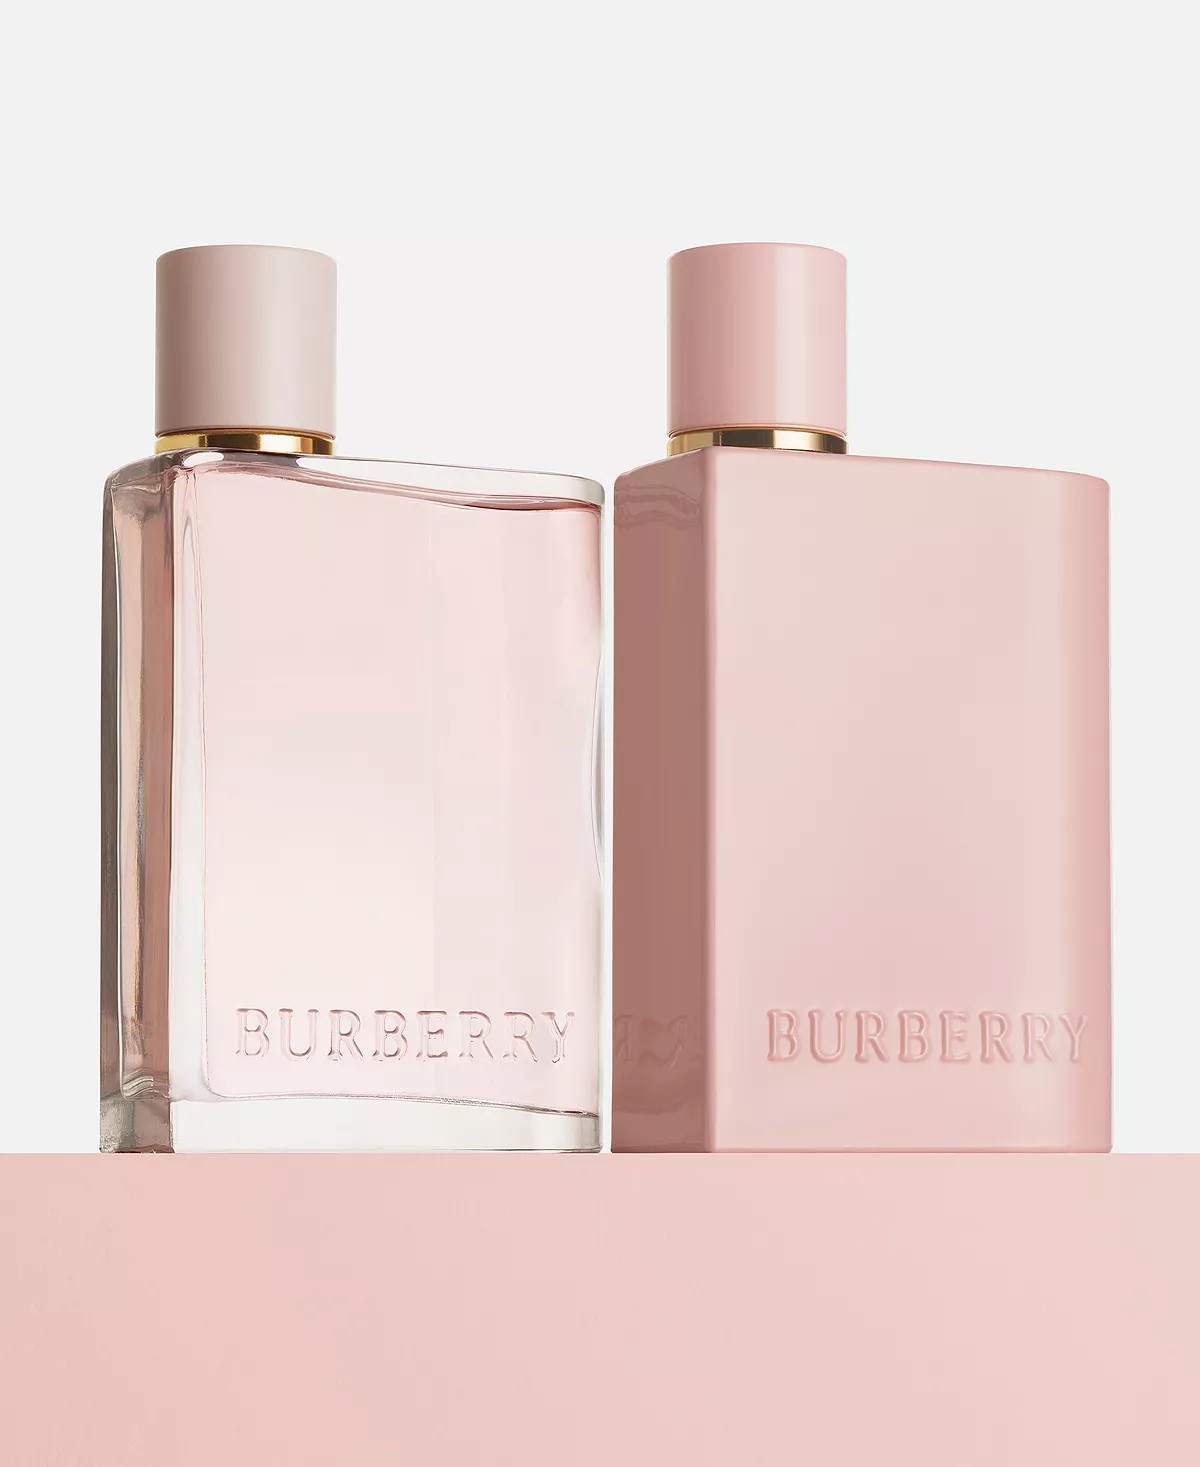 Burberry Elixir - A Milkshake That Stirs ~ Fragrance Reviews